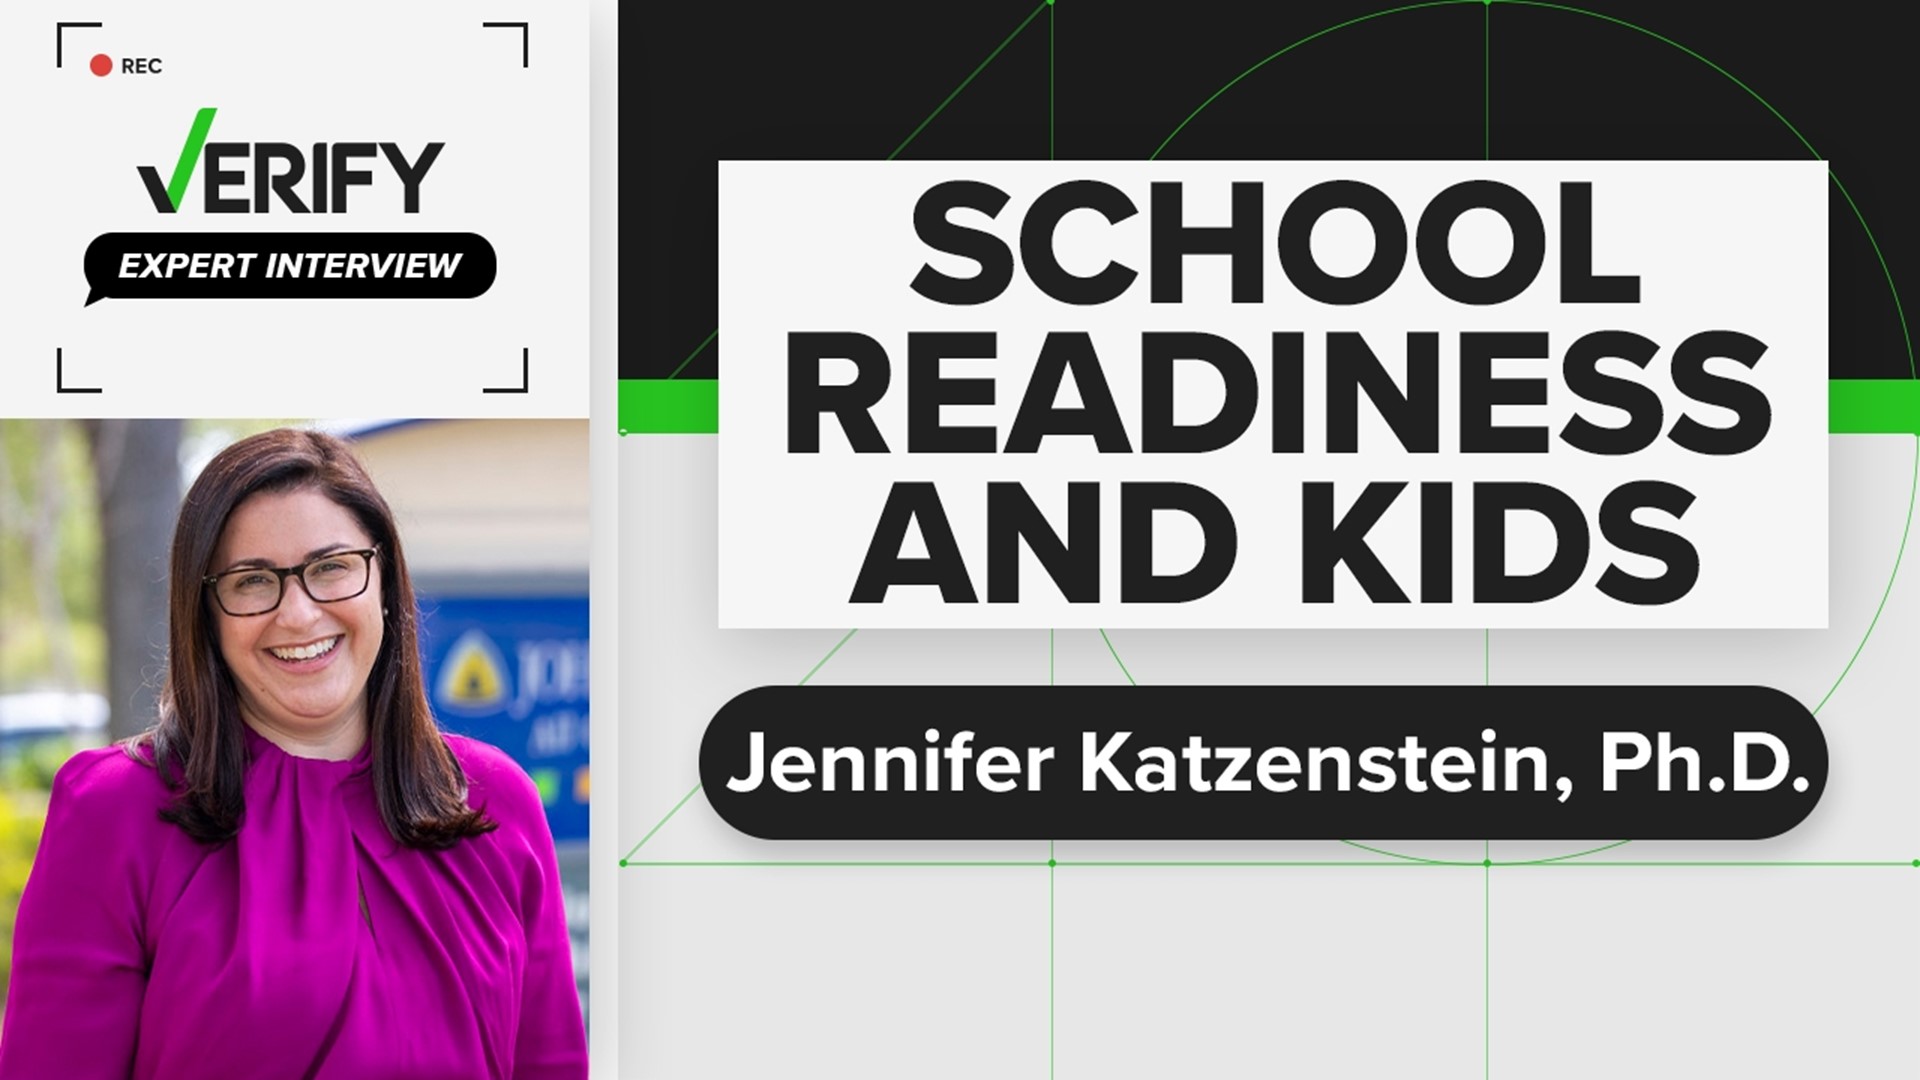 Jennifer Katzenstein, Ph.D. of Johns Hopkins All Children’s Hospital talks about determining when young children are ready for school.